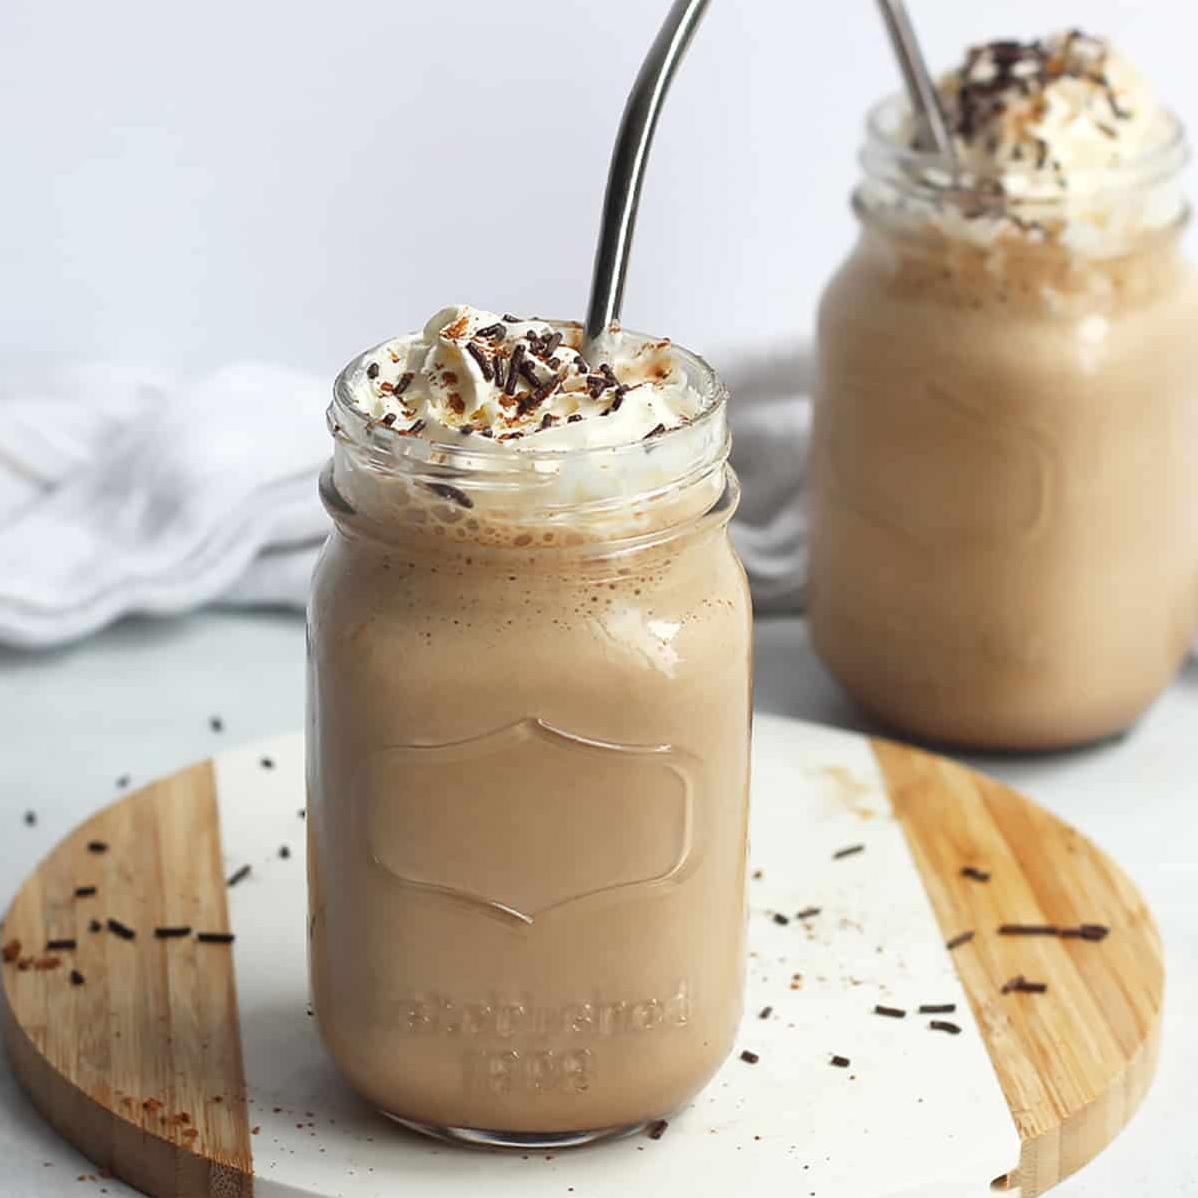  Satisfy your sweet tooth with this creamy Chocolate Mocha Milkshake.